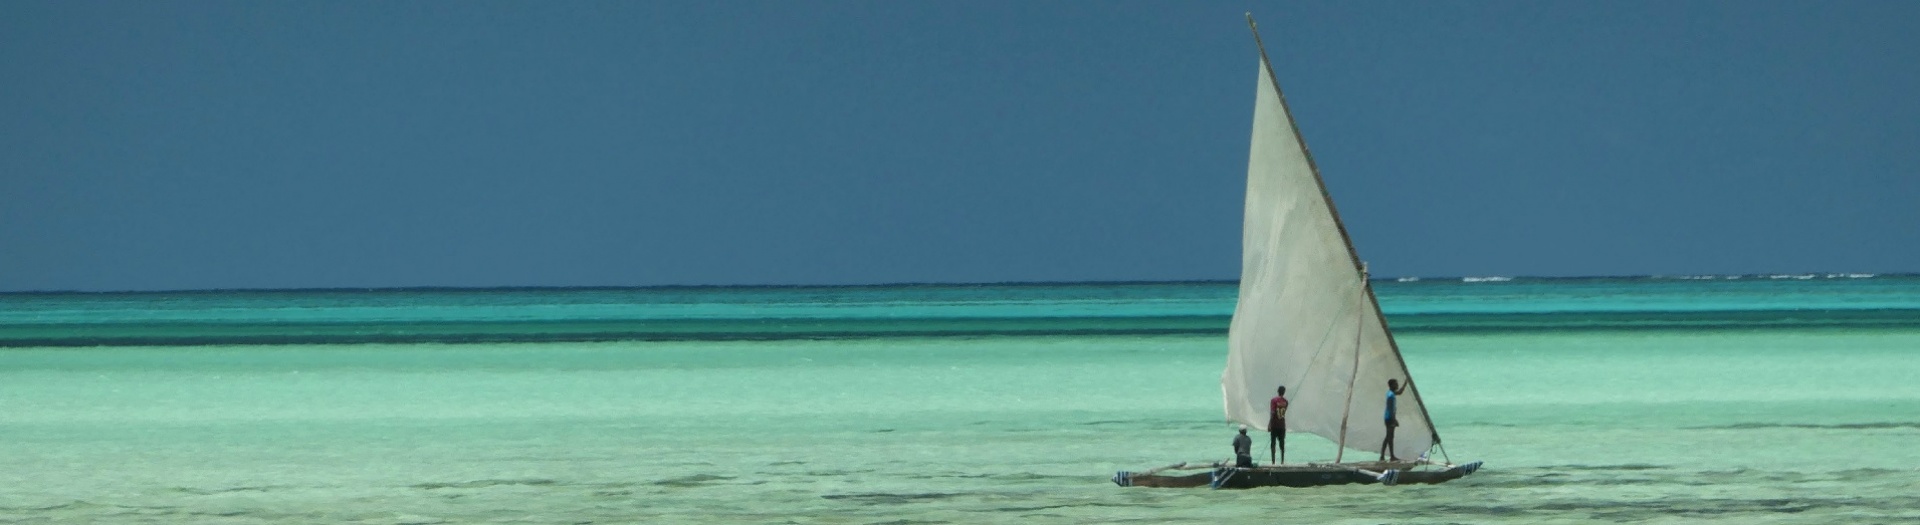 L'archipel de Zanzibar